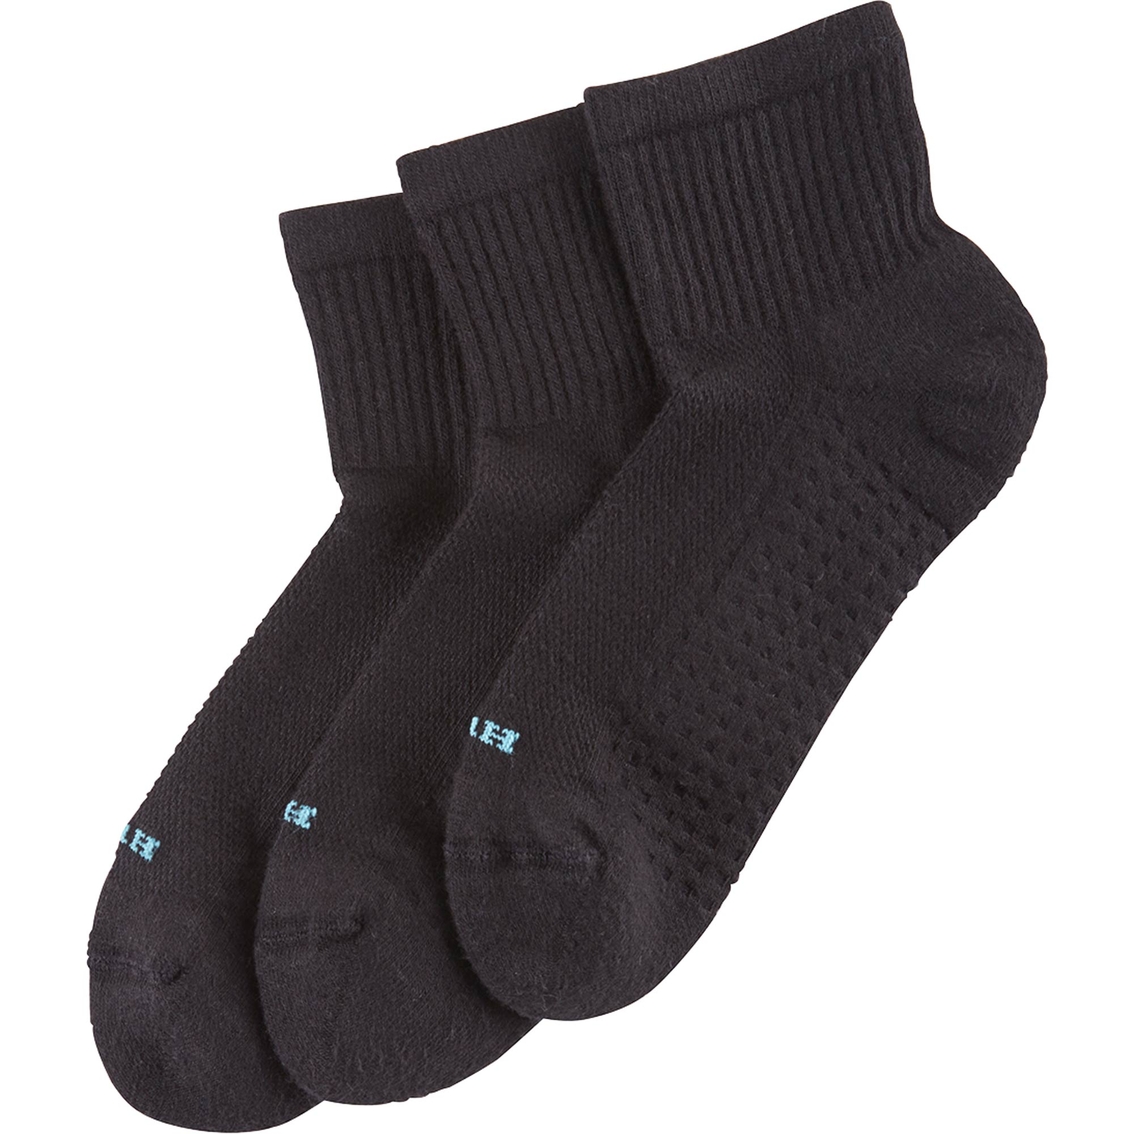 Hue Air Cushion Crew Socks 3 Pk. | Socks & Tights | Clothing ...